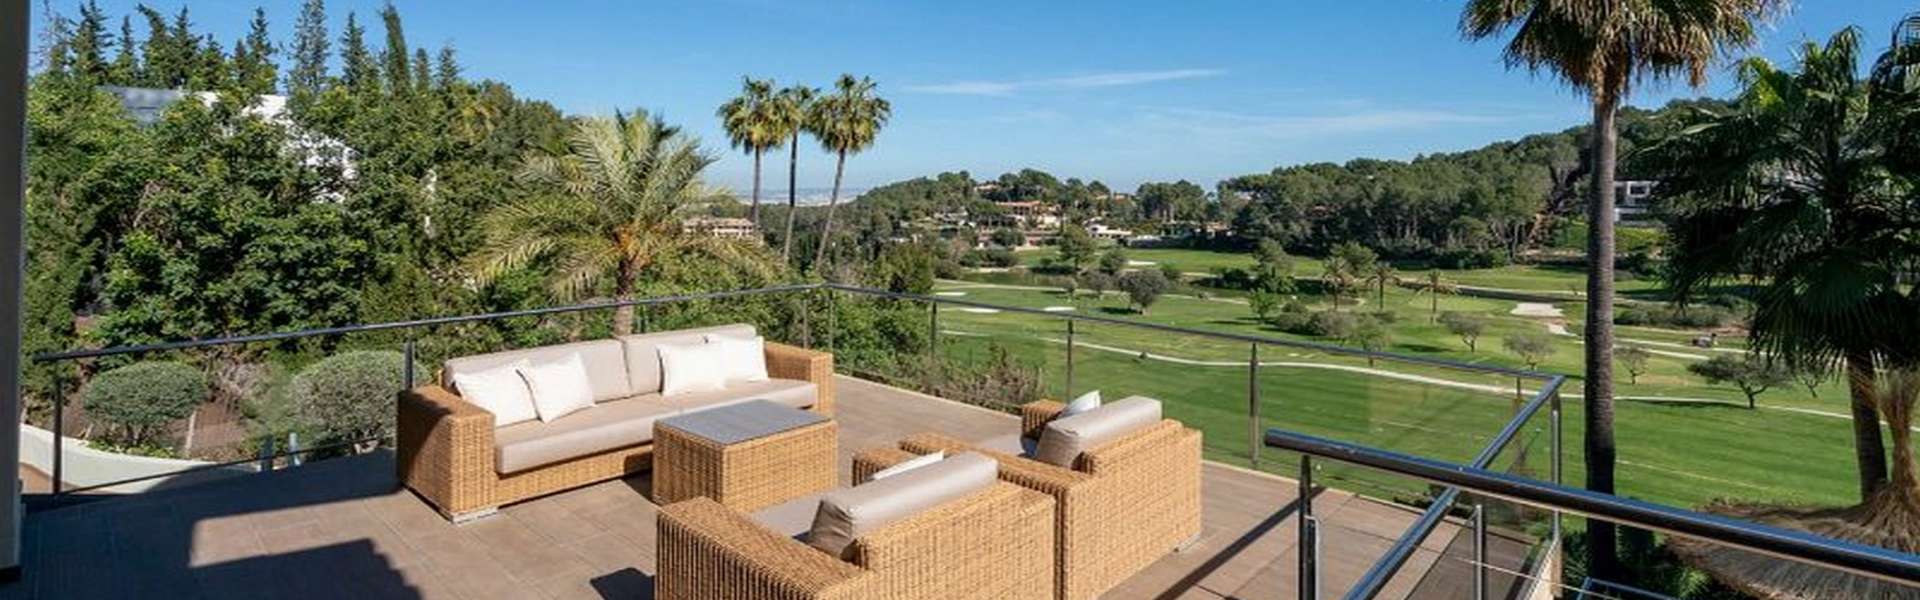 Palma/Son Vida - Fantastic villa with view to the golf course